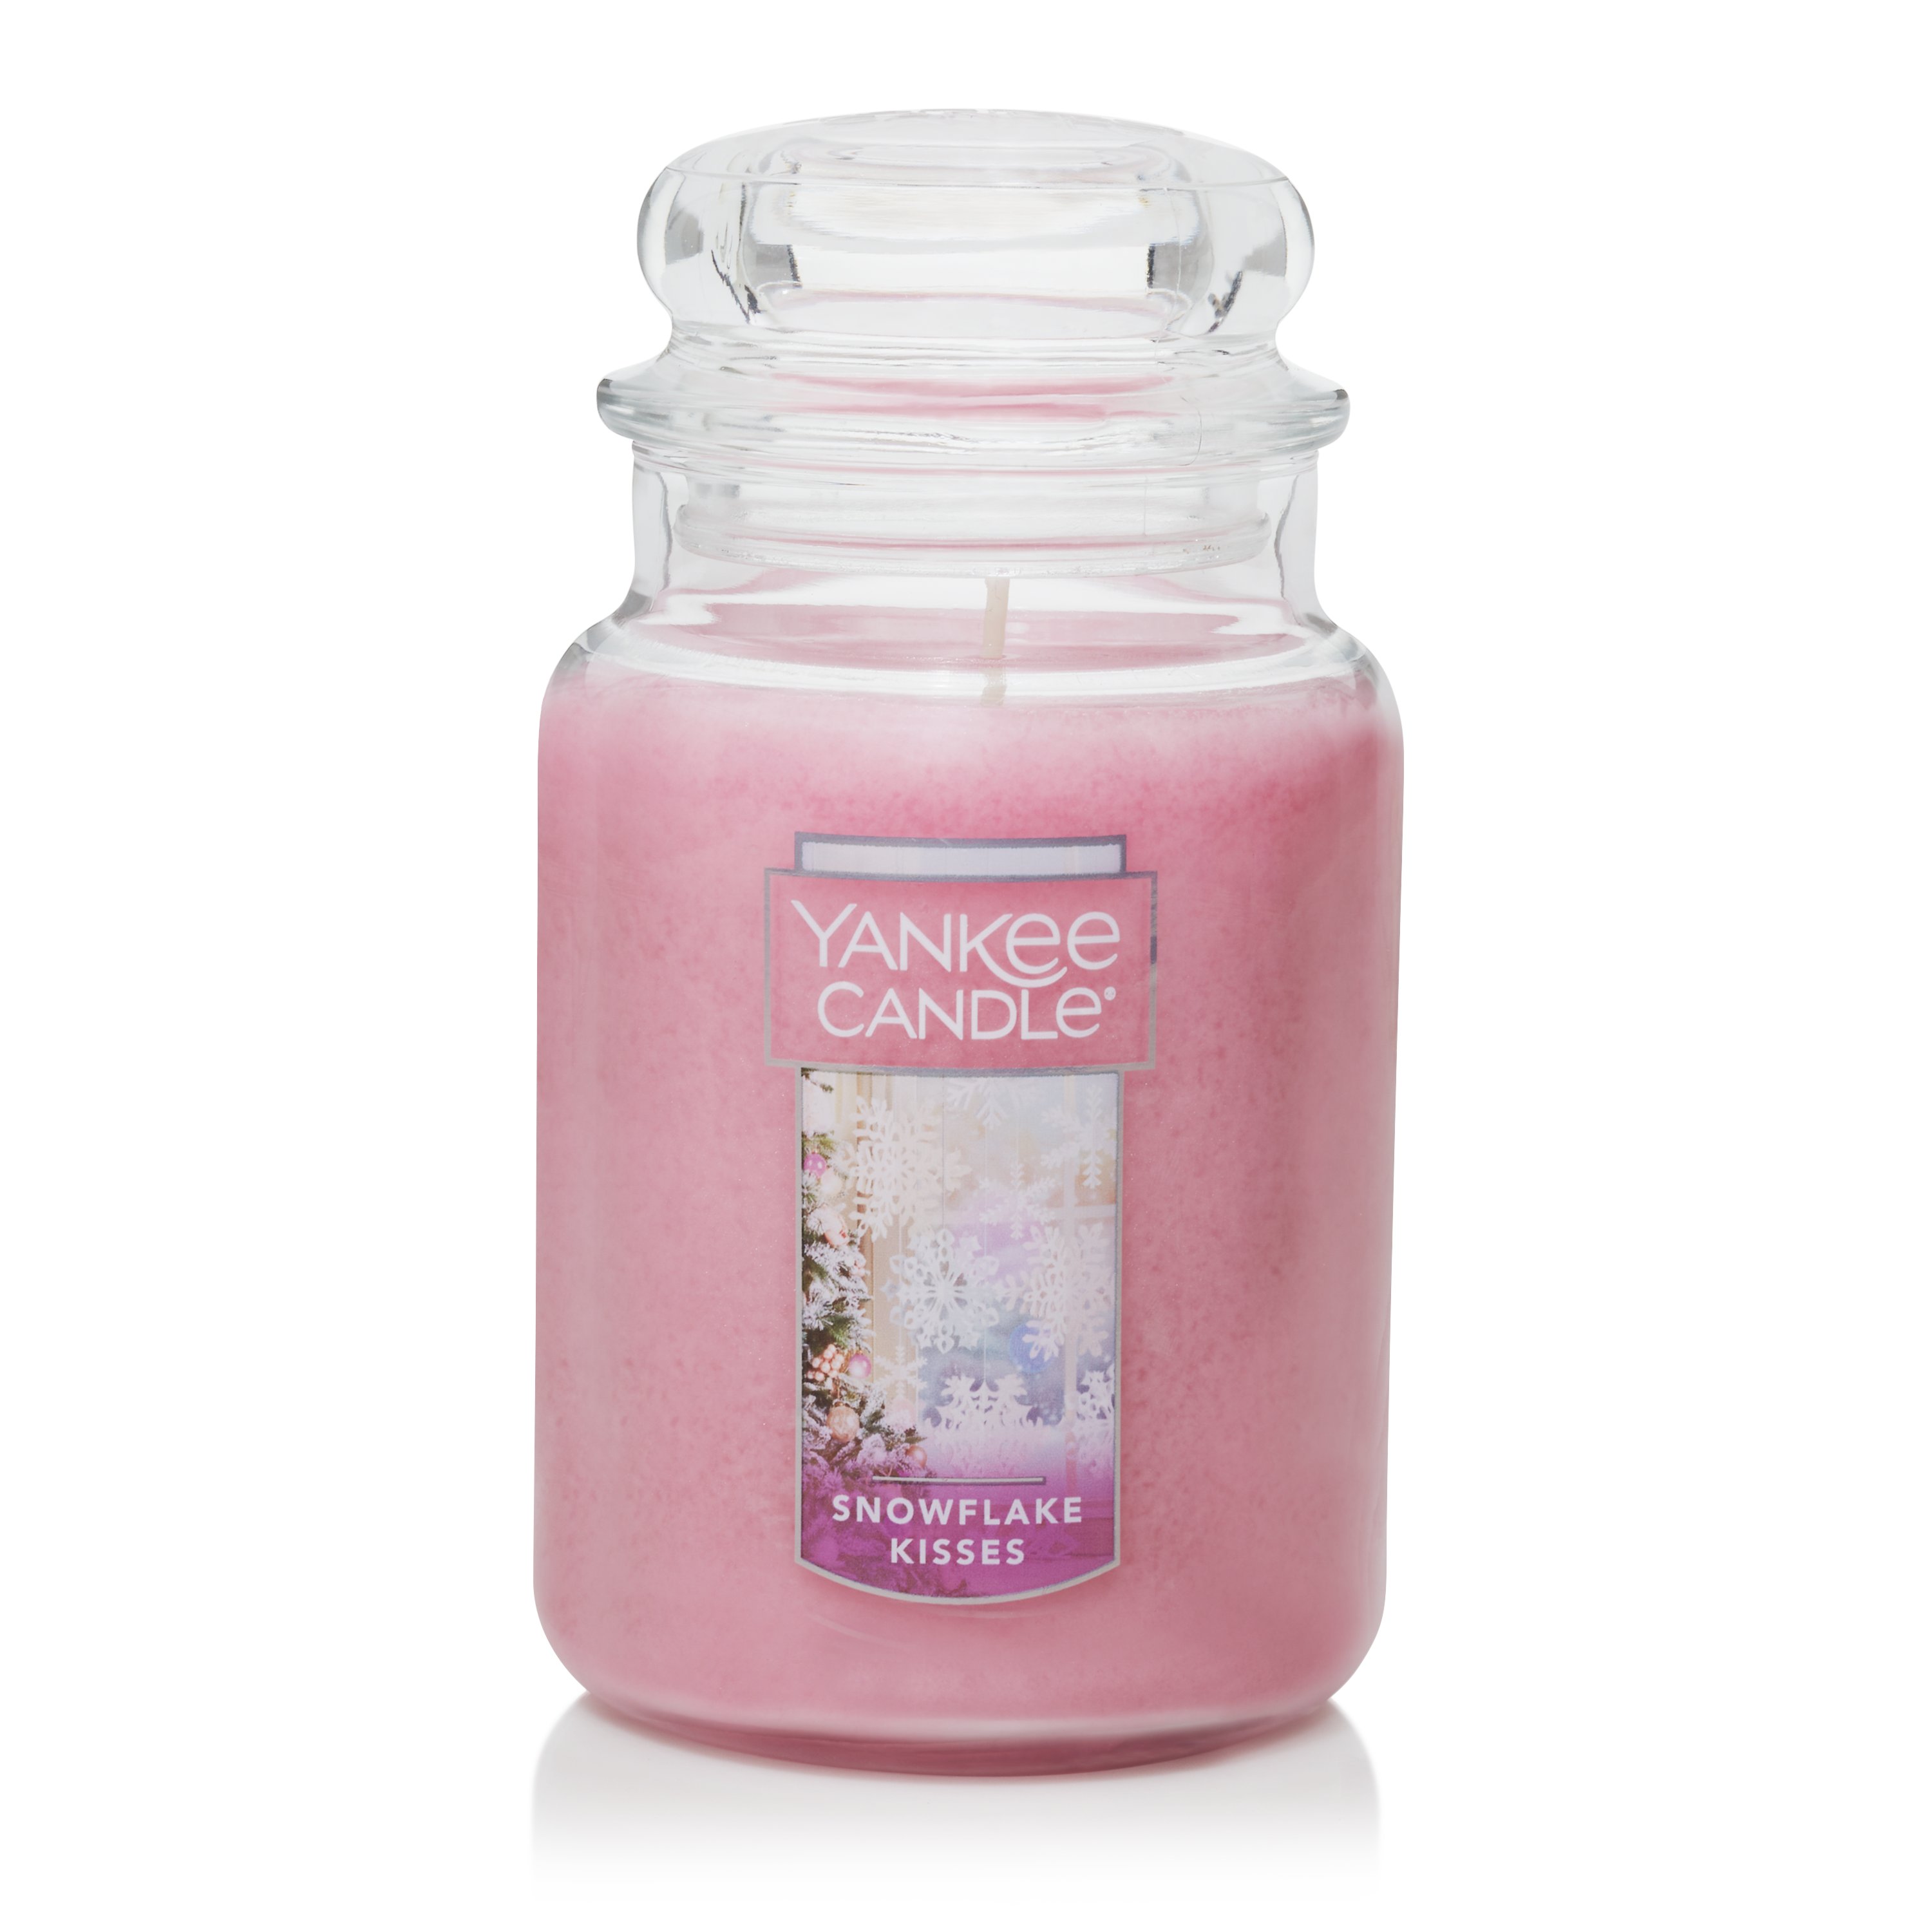 Yankee Candle Winter Holiday Fragranced Wax Melts (Snowflake Kisses)